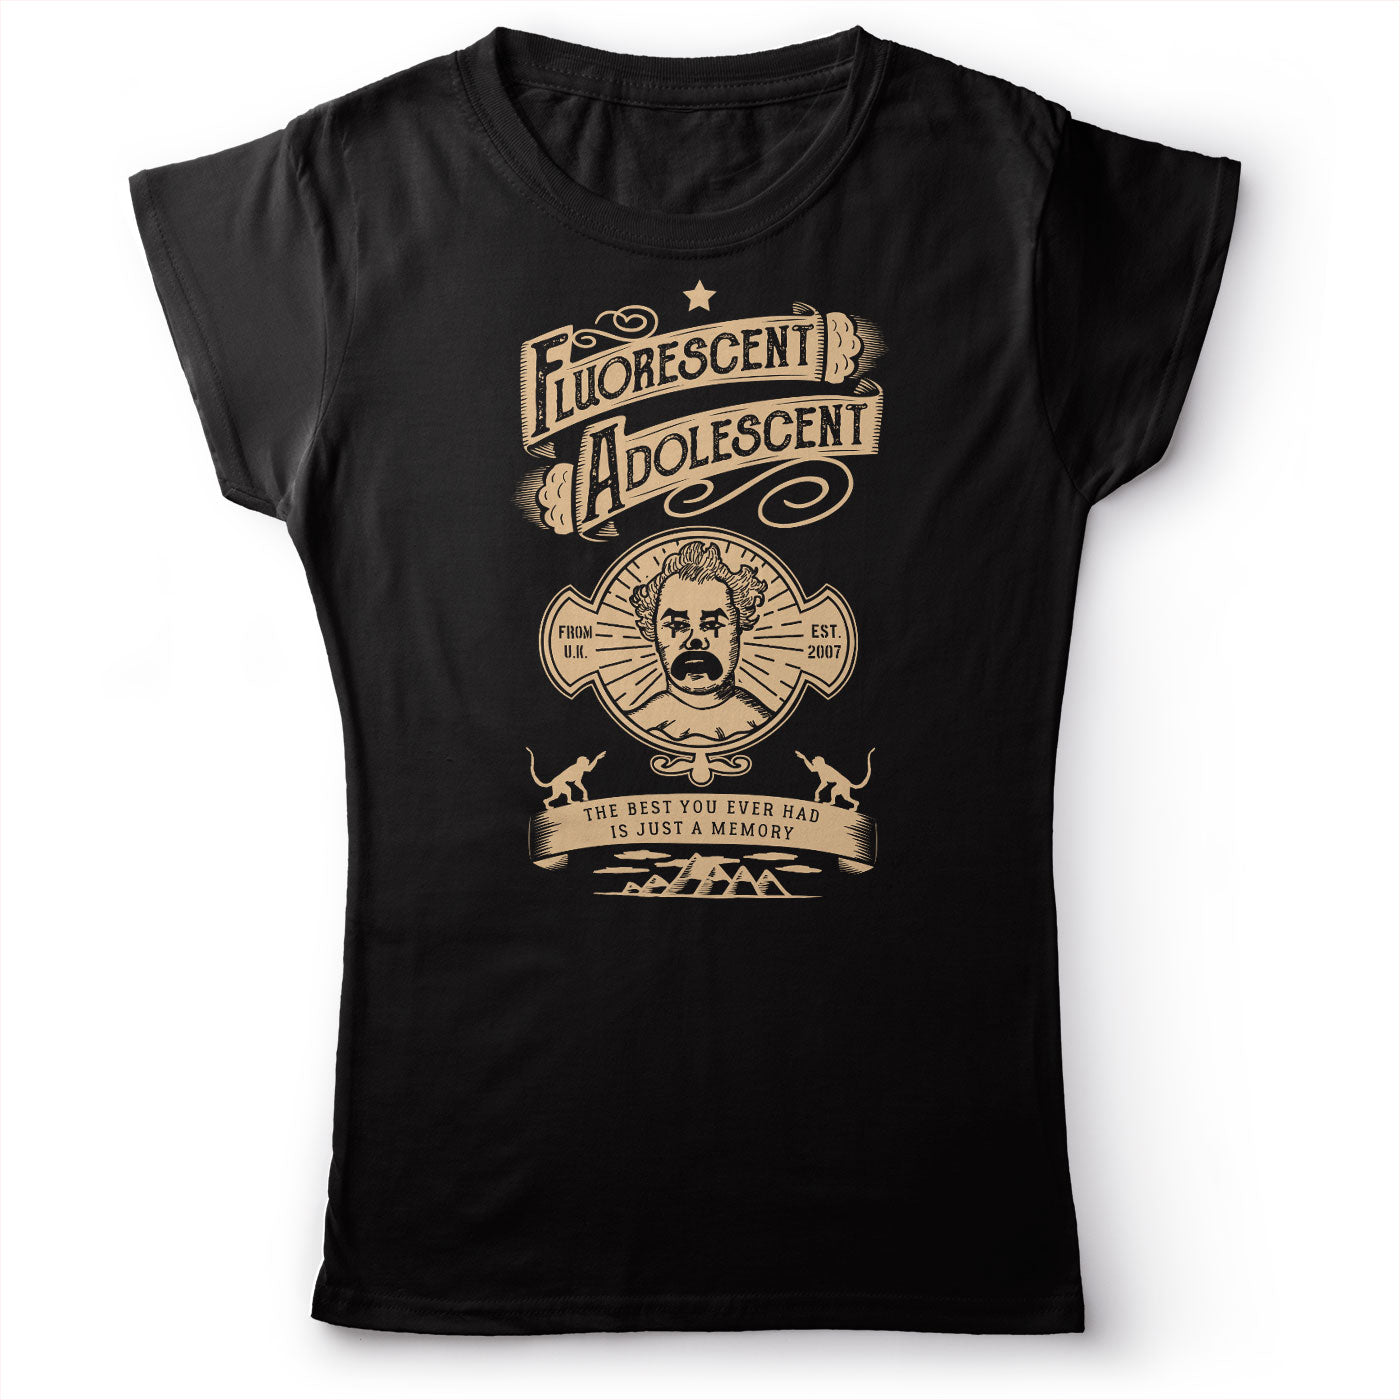 Arctic Monkeys - Fluorescent Adolescent - Women's T-Shirt Black 2